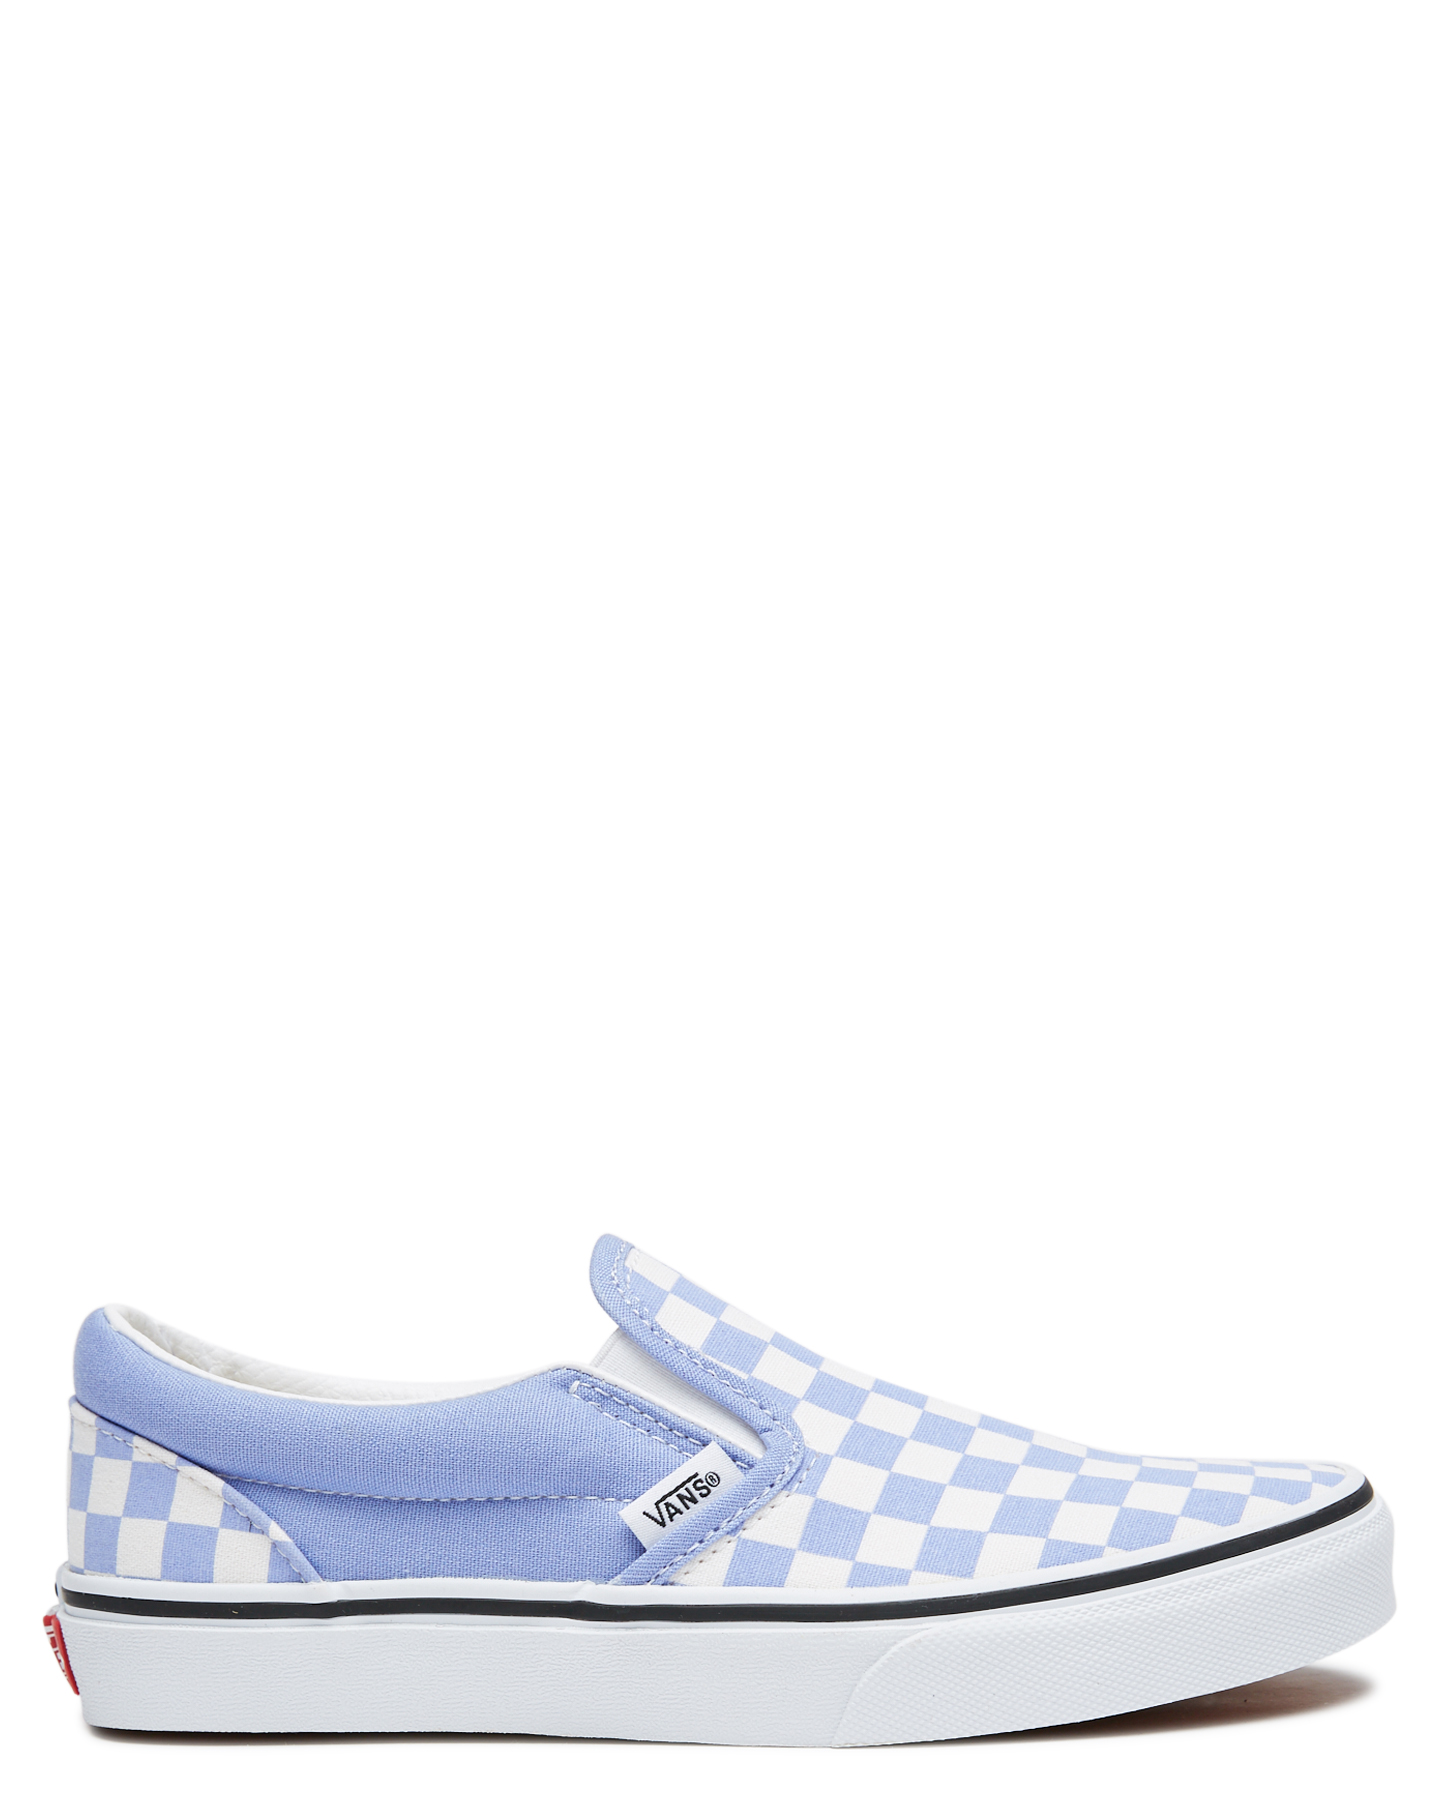 blue vans shoes for girls